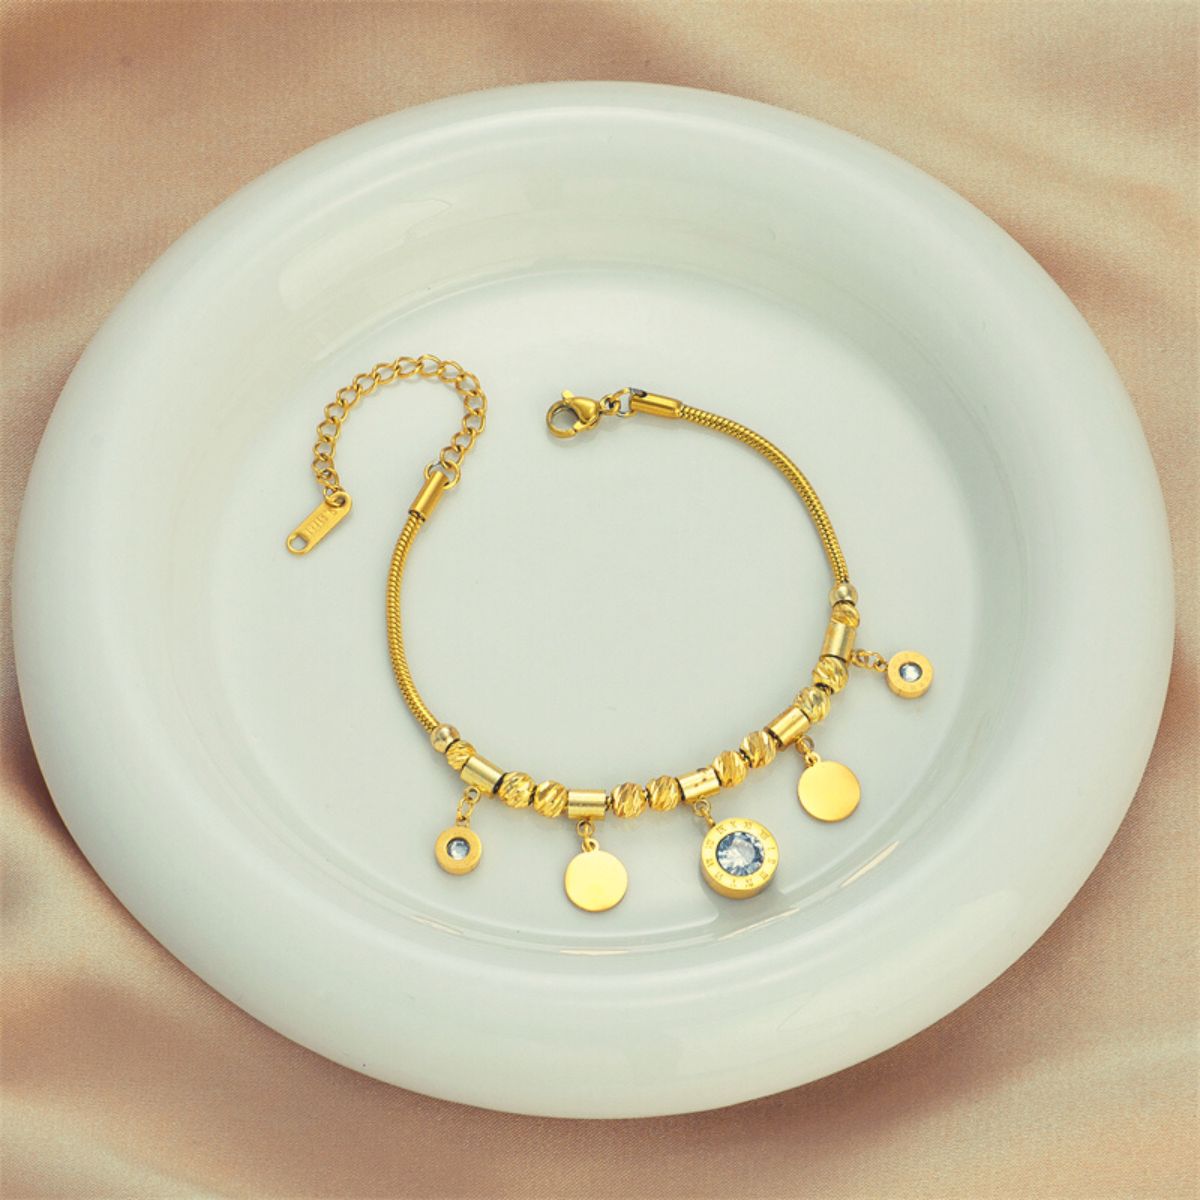 pulseira de berloques, pulseira banhada a ouro, ouro 18k, pulseira cravejada, pulseira feminina, acessórios femininos, semijoias, semijoias femininas, aço inoxidável